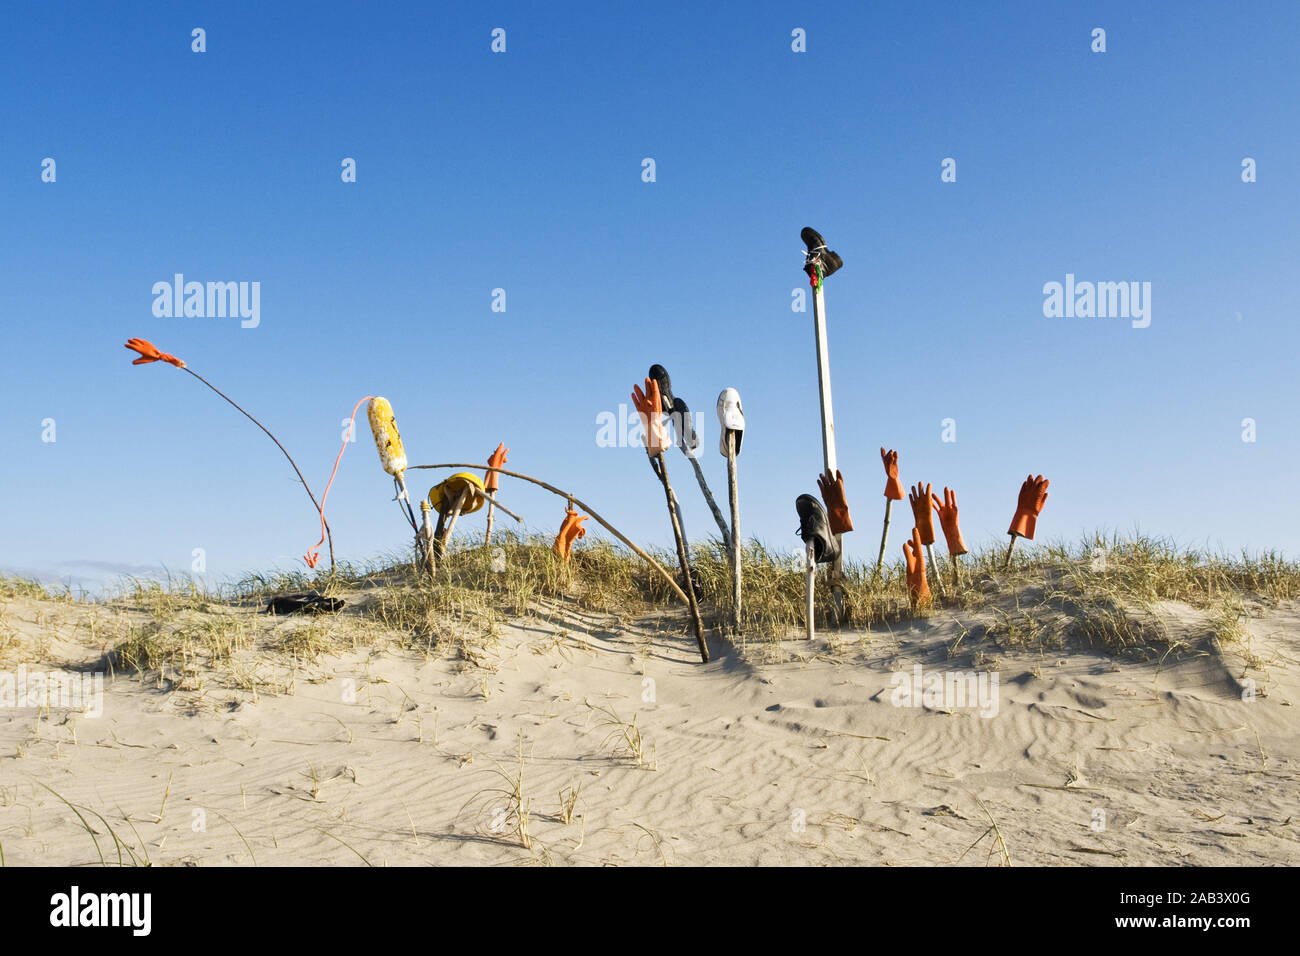 Strandgut an einem Strand an der Nordsee |Flotsam on a beach at the North Sea| Stock Photo